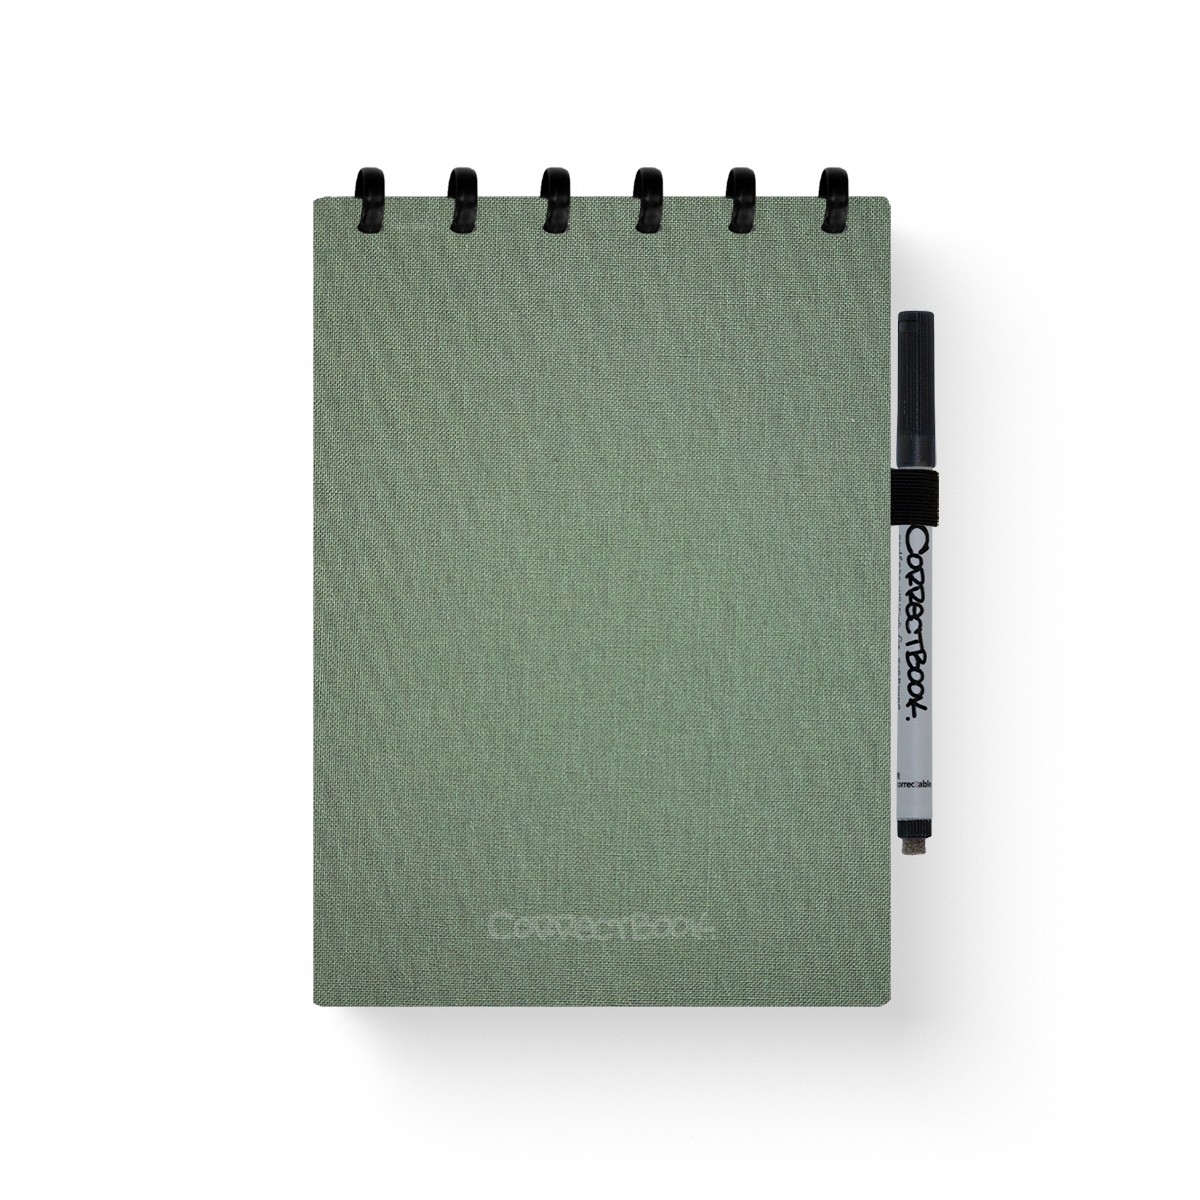 Correctbook Linnen Hardcover A5 Top Binding Olive Green